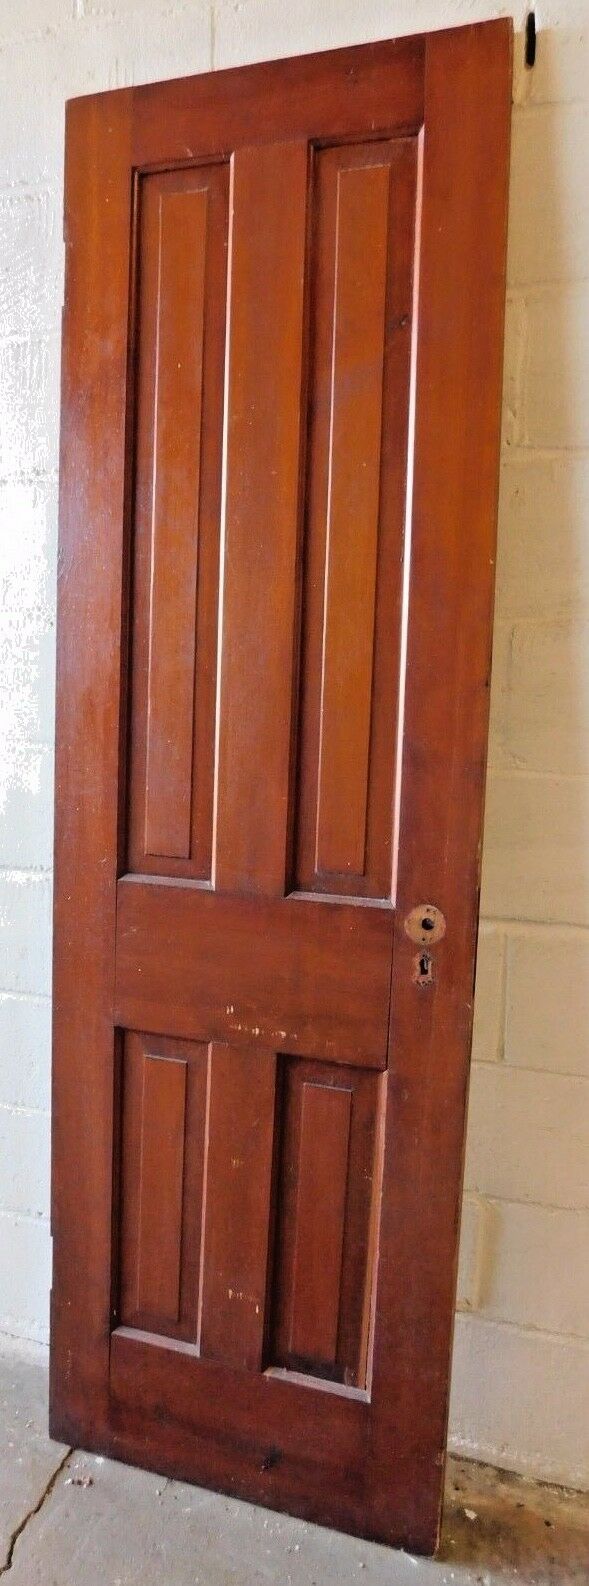 1800's Antique Wooden DOOR Interior Four Raised Panel Victorian Style Fir ORNATE